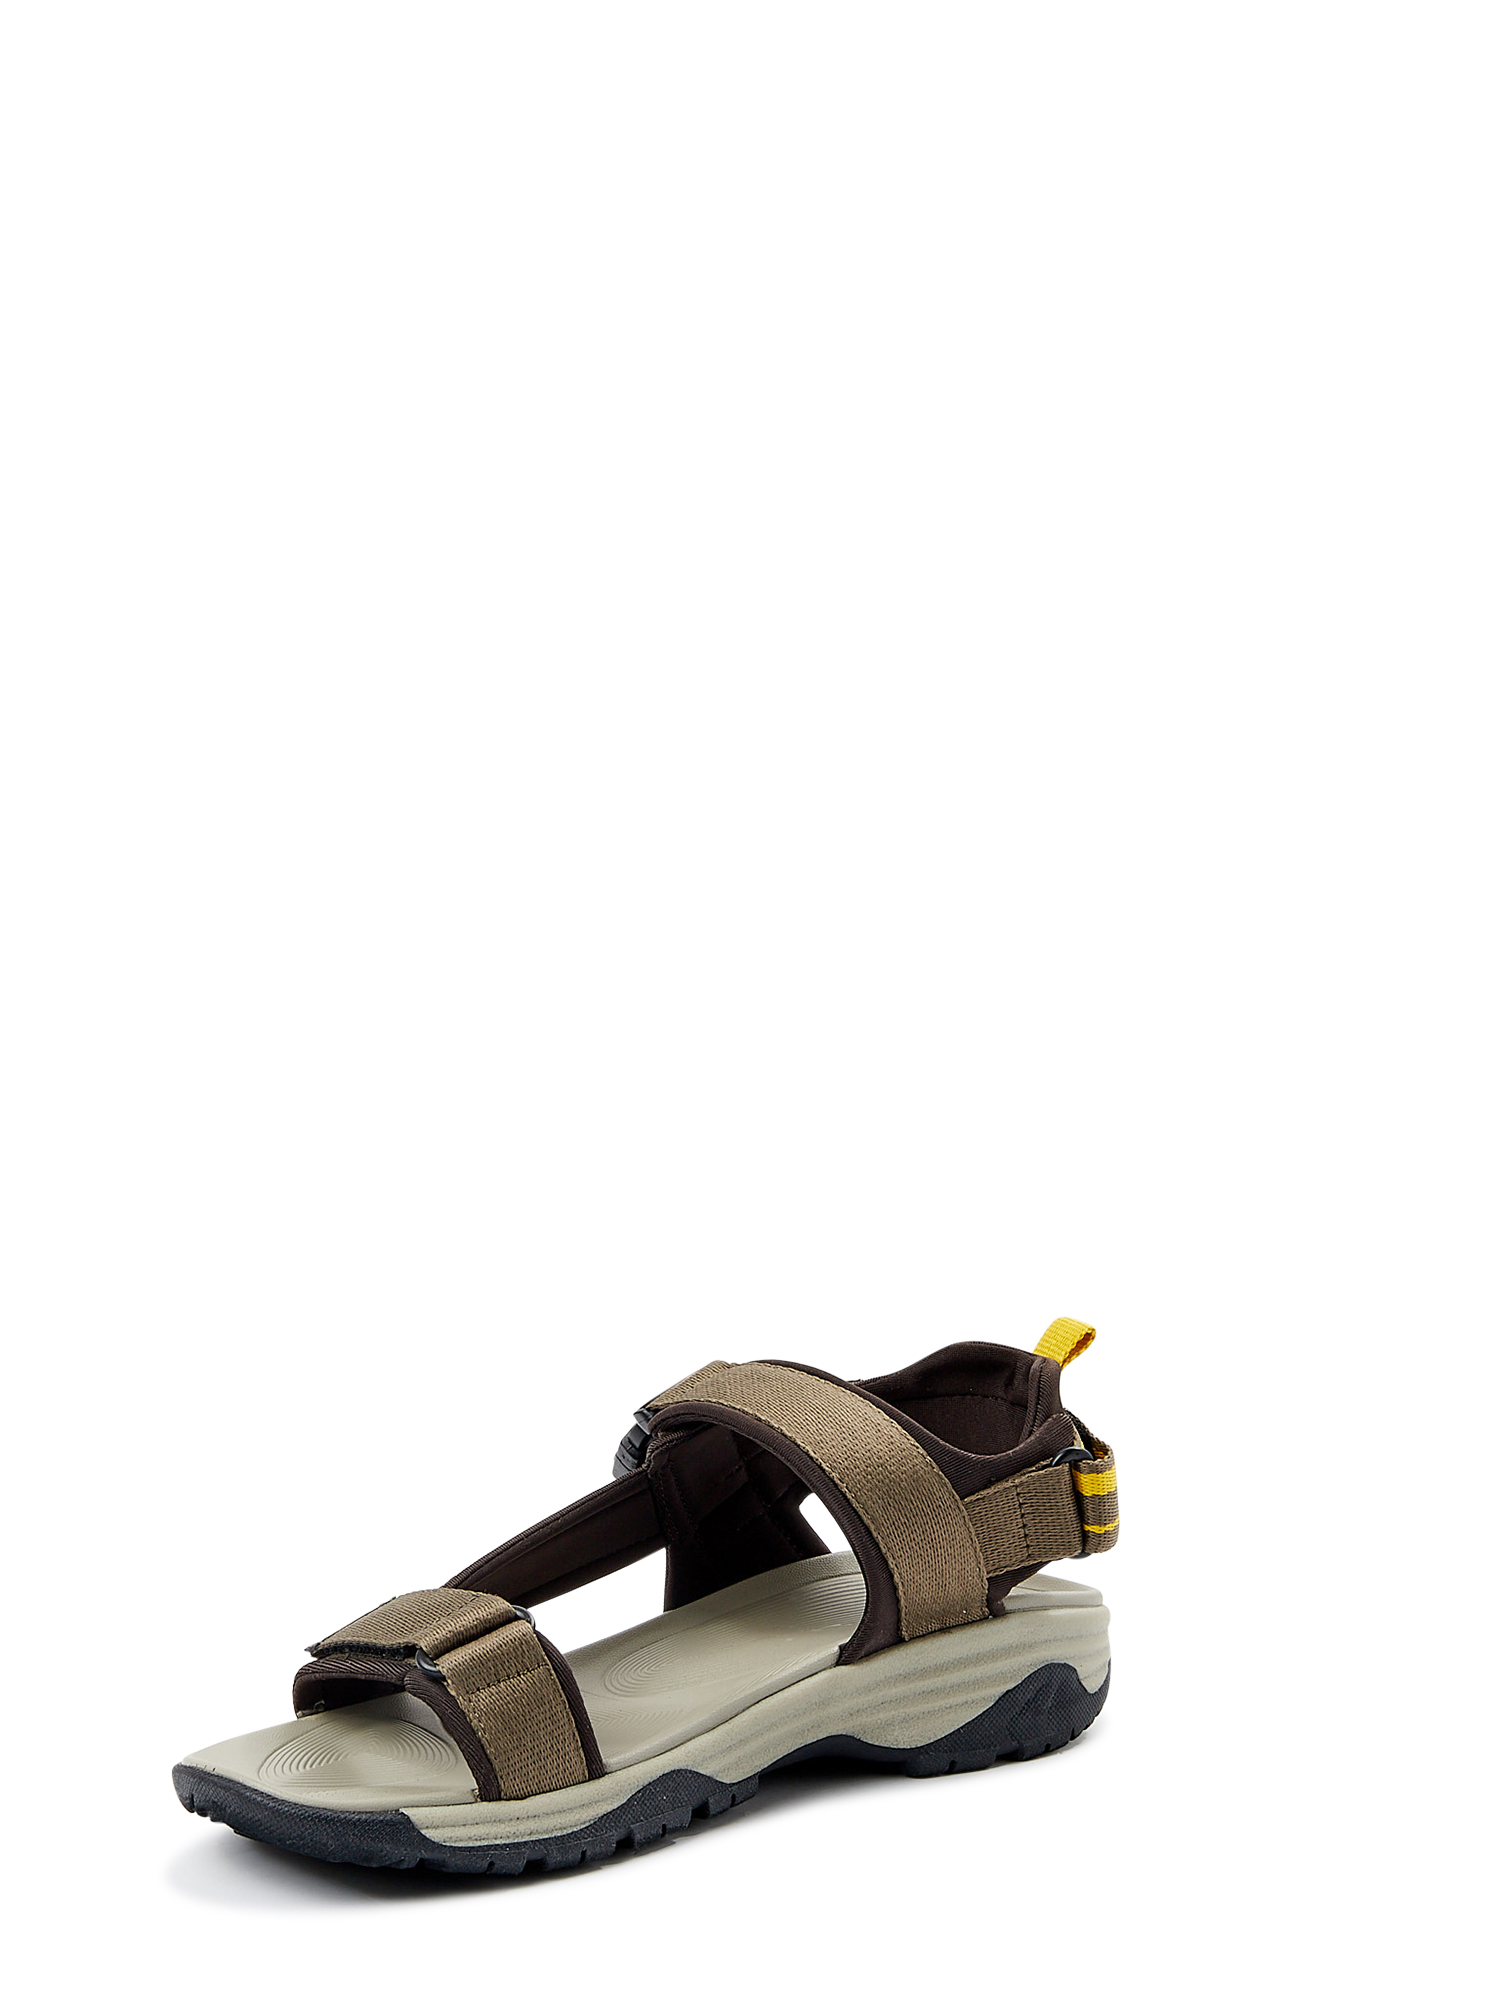 Elastic Band Closure, Comfortable : Flat Sandals for Men : Nuu - 0522NuM –  Jhuti